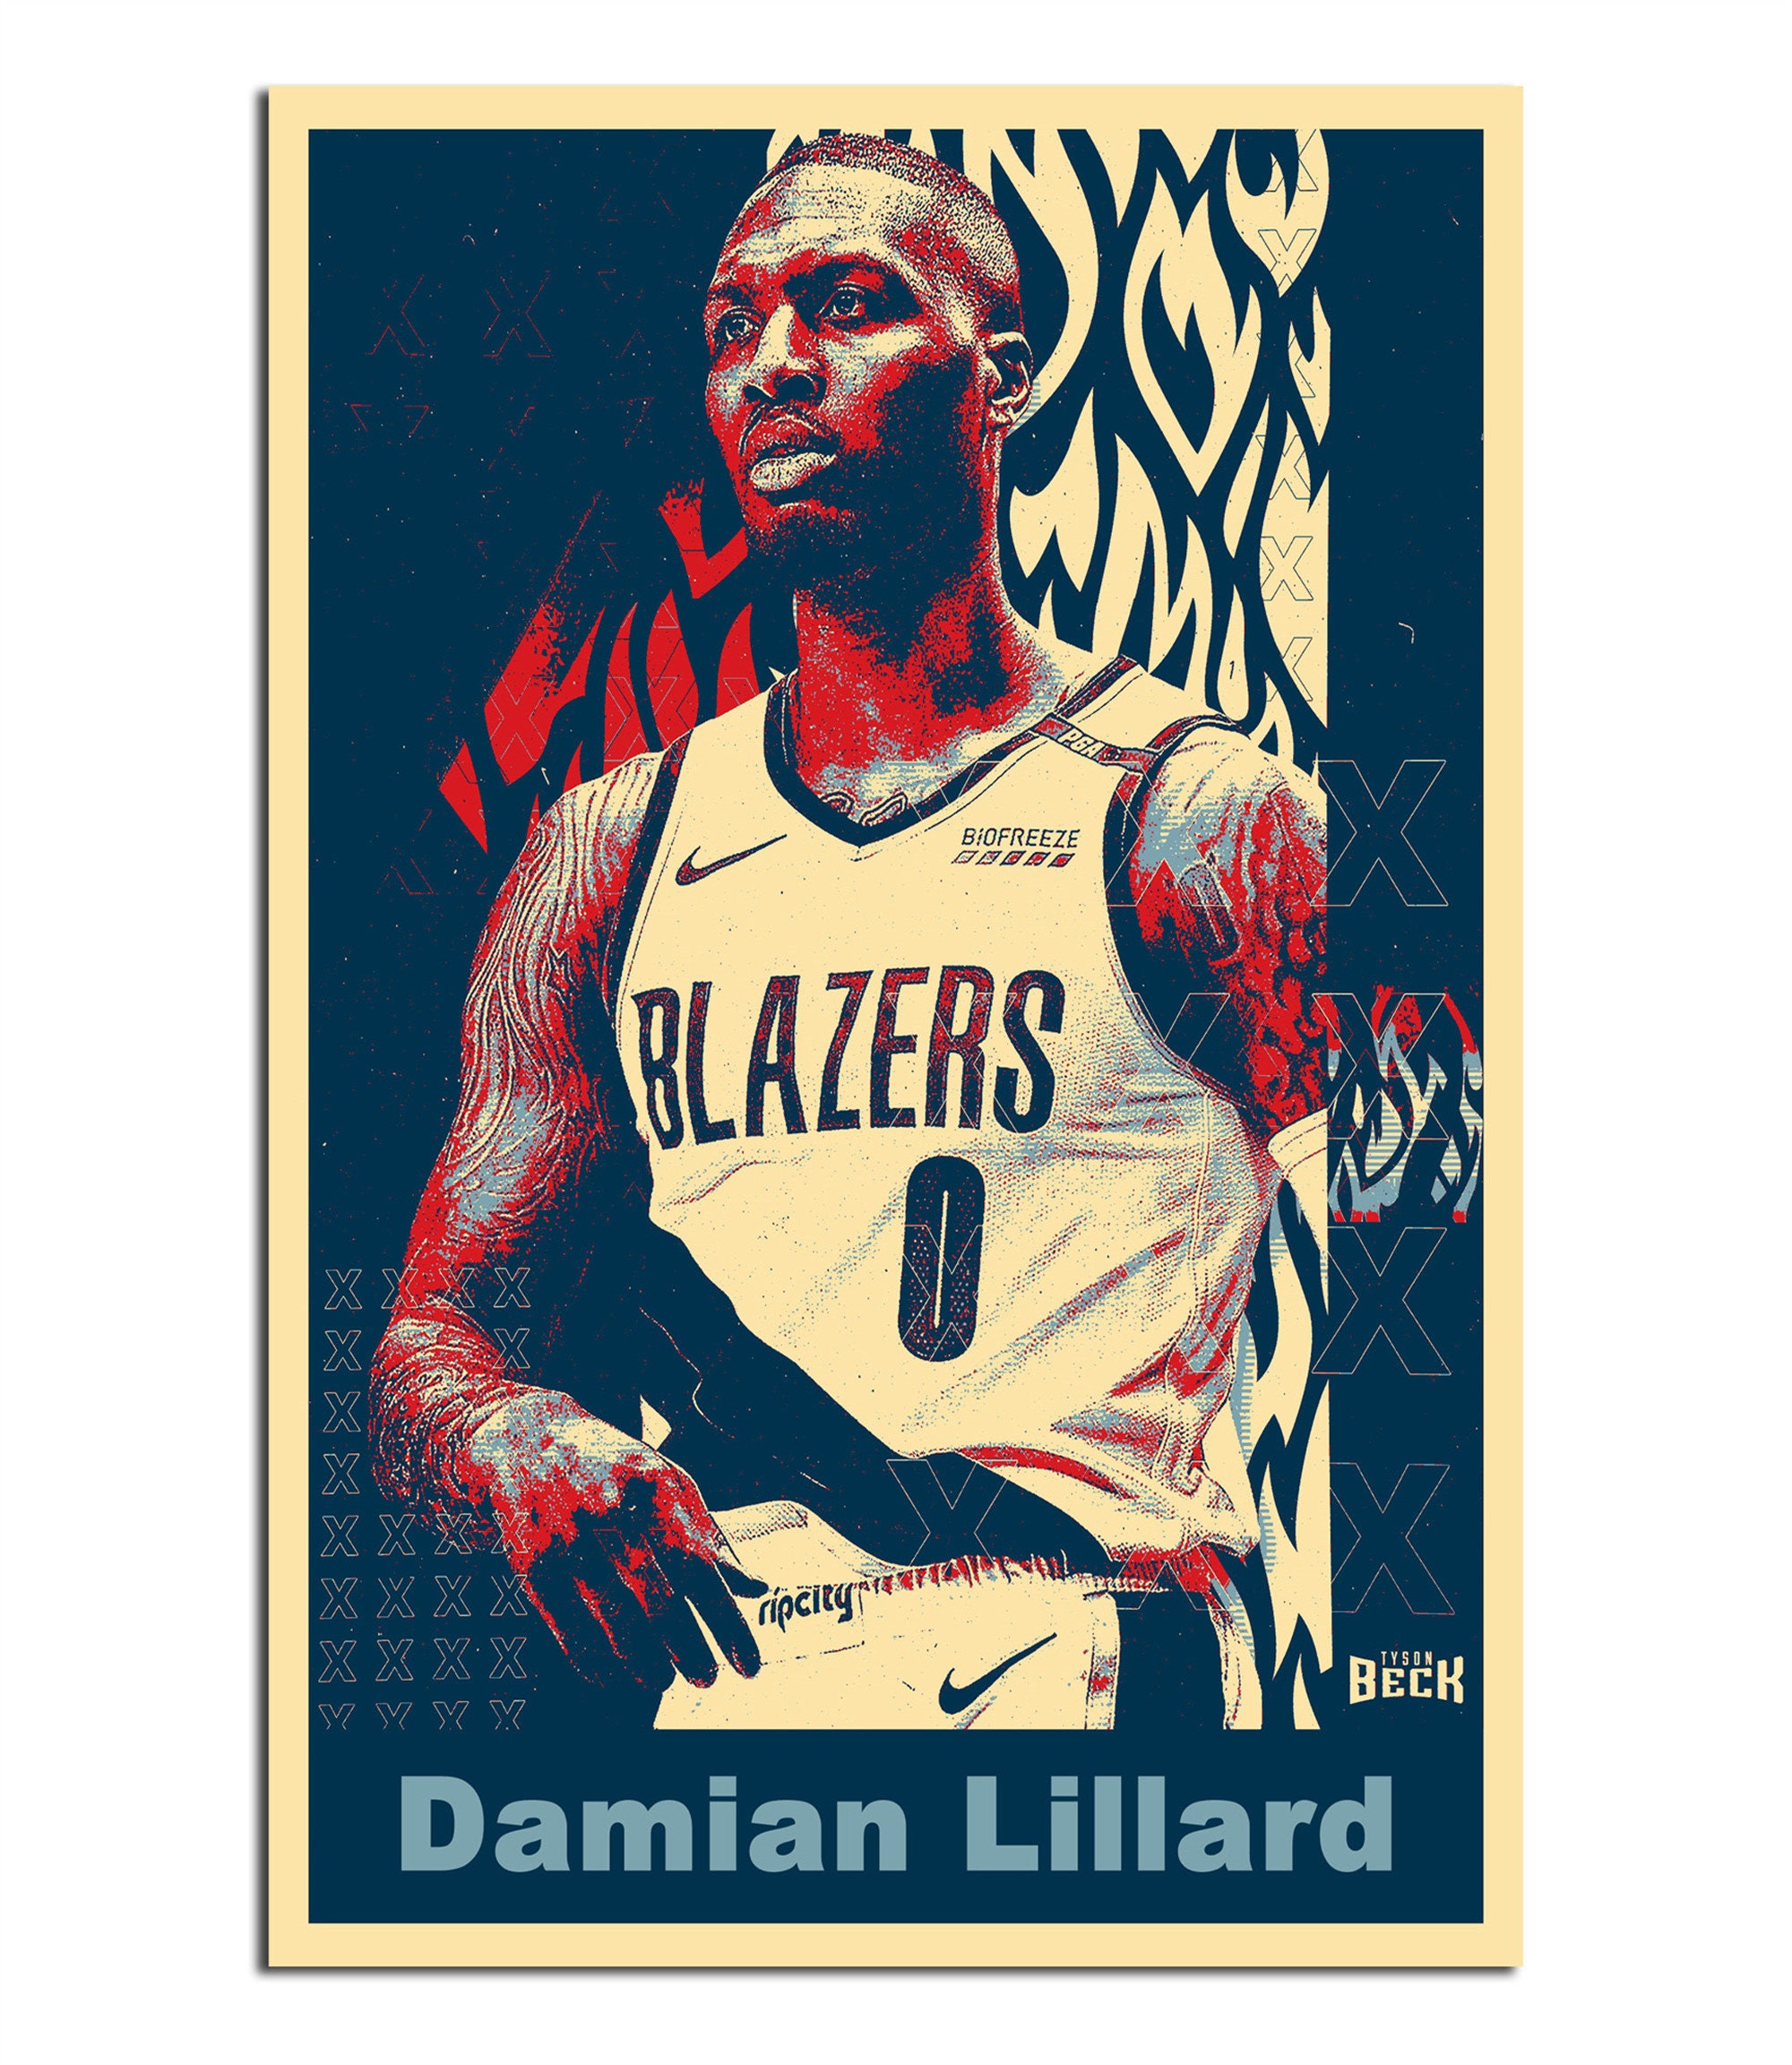 Damian Lillard's Jersey Among NBA's Best-Sellers - Blazer's Edge